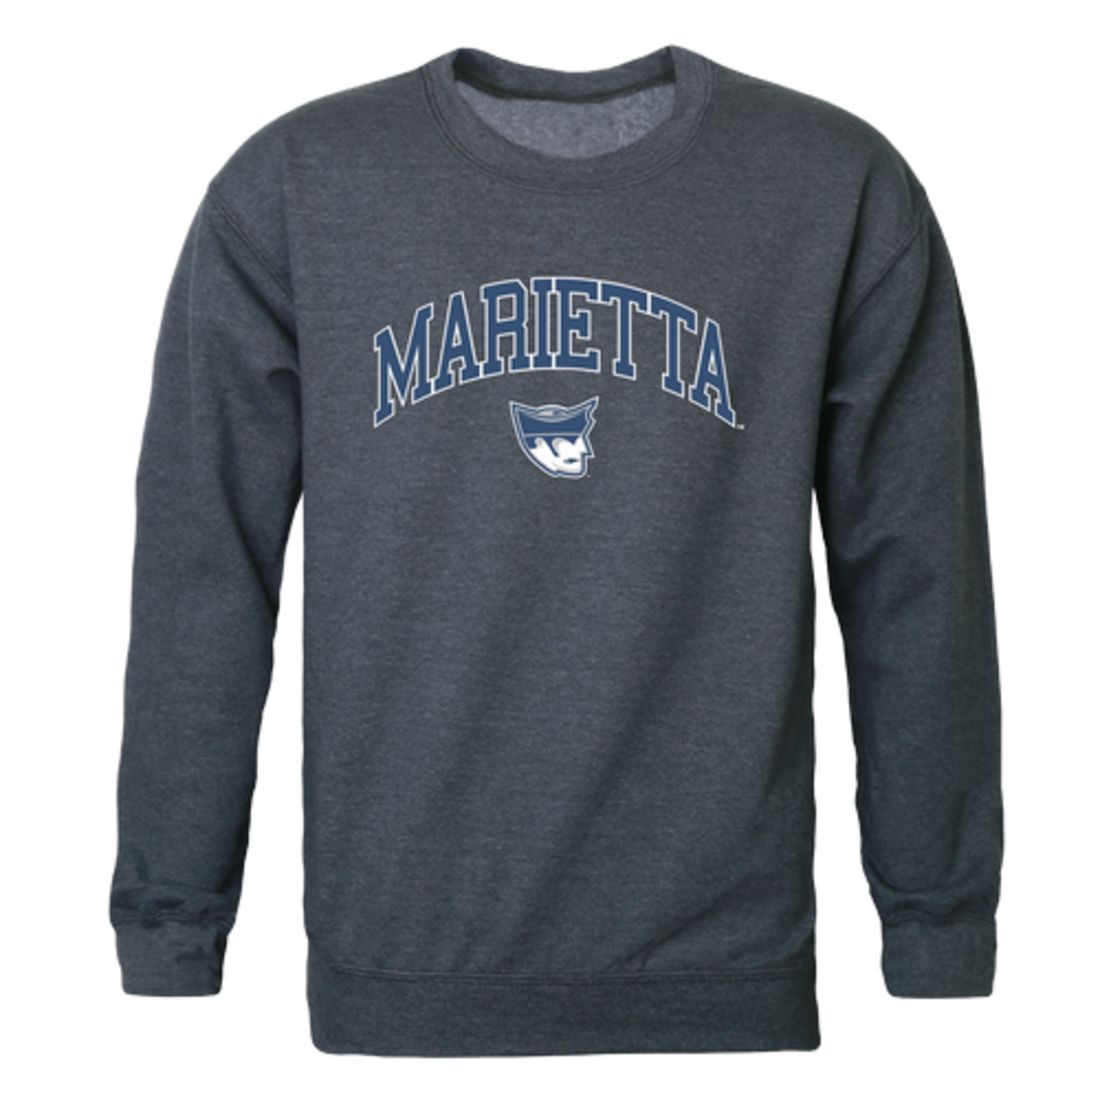 Marietta College Pioneers Campus Crewneck Sweatshirt